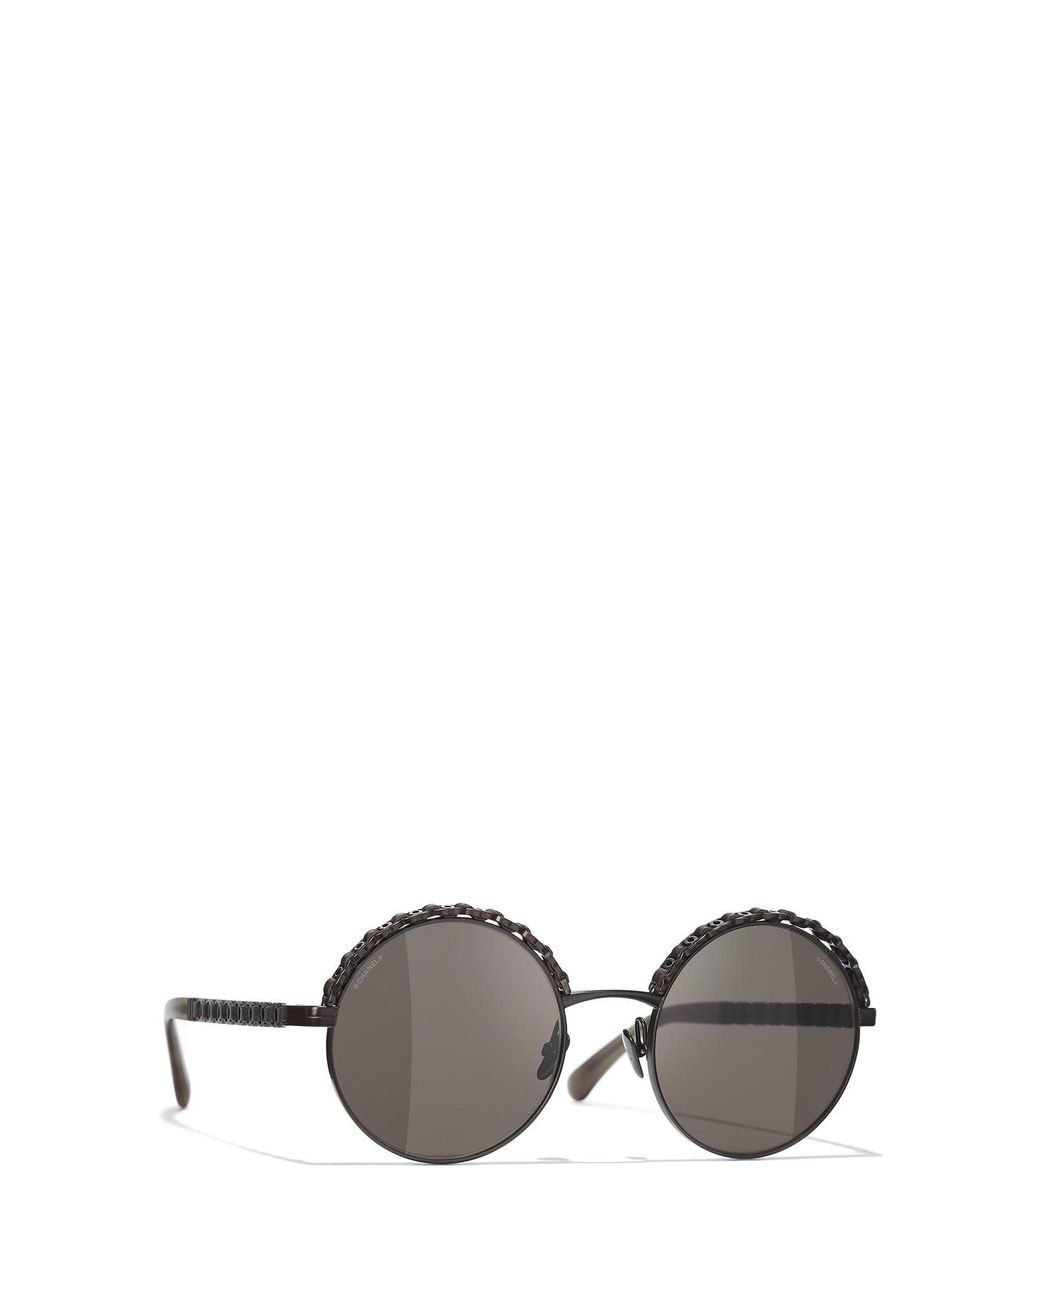 Chanel 5404Q 1462S2 Sunglasses  Blue sunglasses Sunglasses Chanel  eyewear